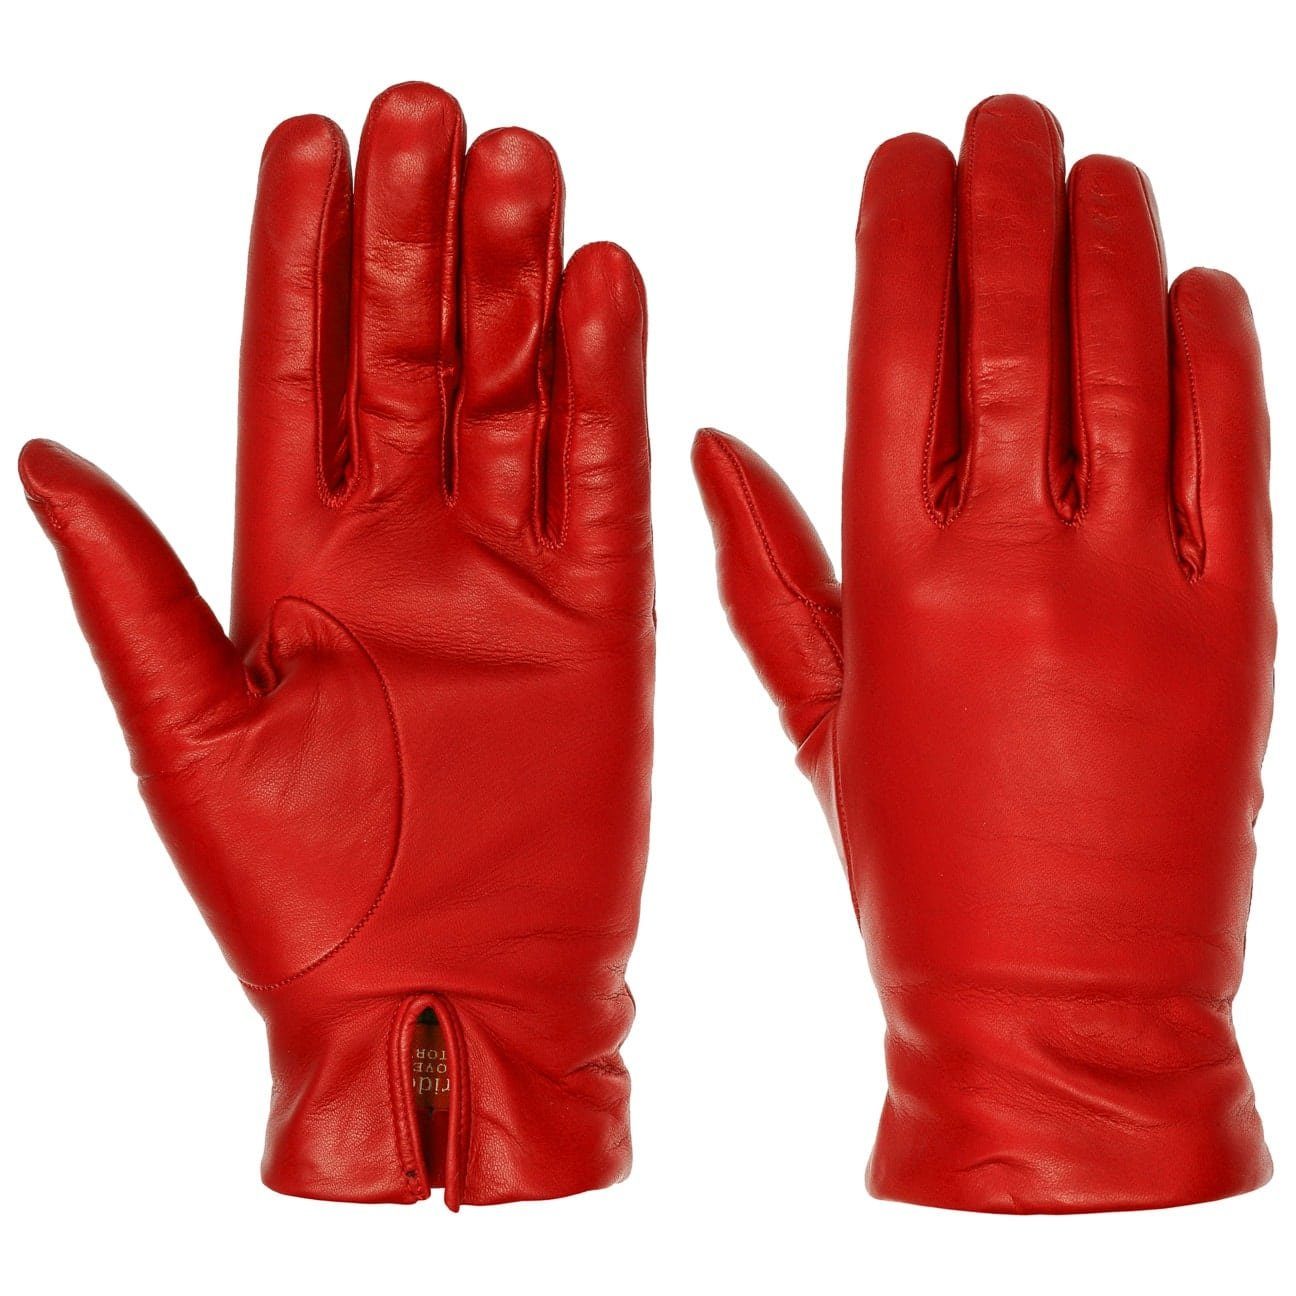 Caridei Lederhandschuhe Fingerhandschuhe mit Futter, Made in Italy rot | Handschuhe